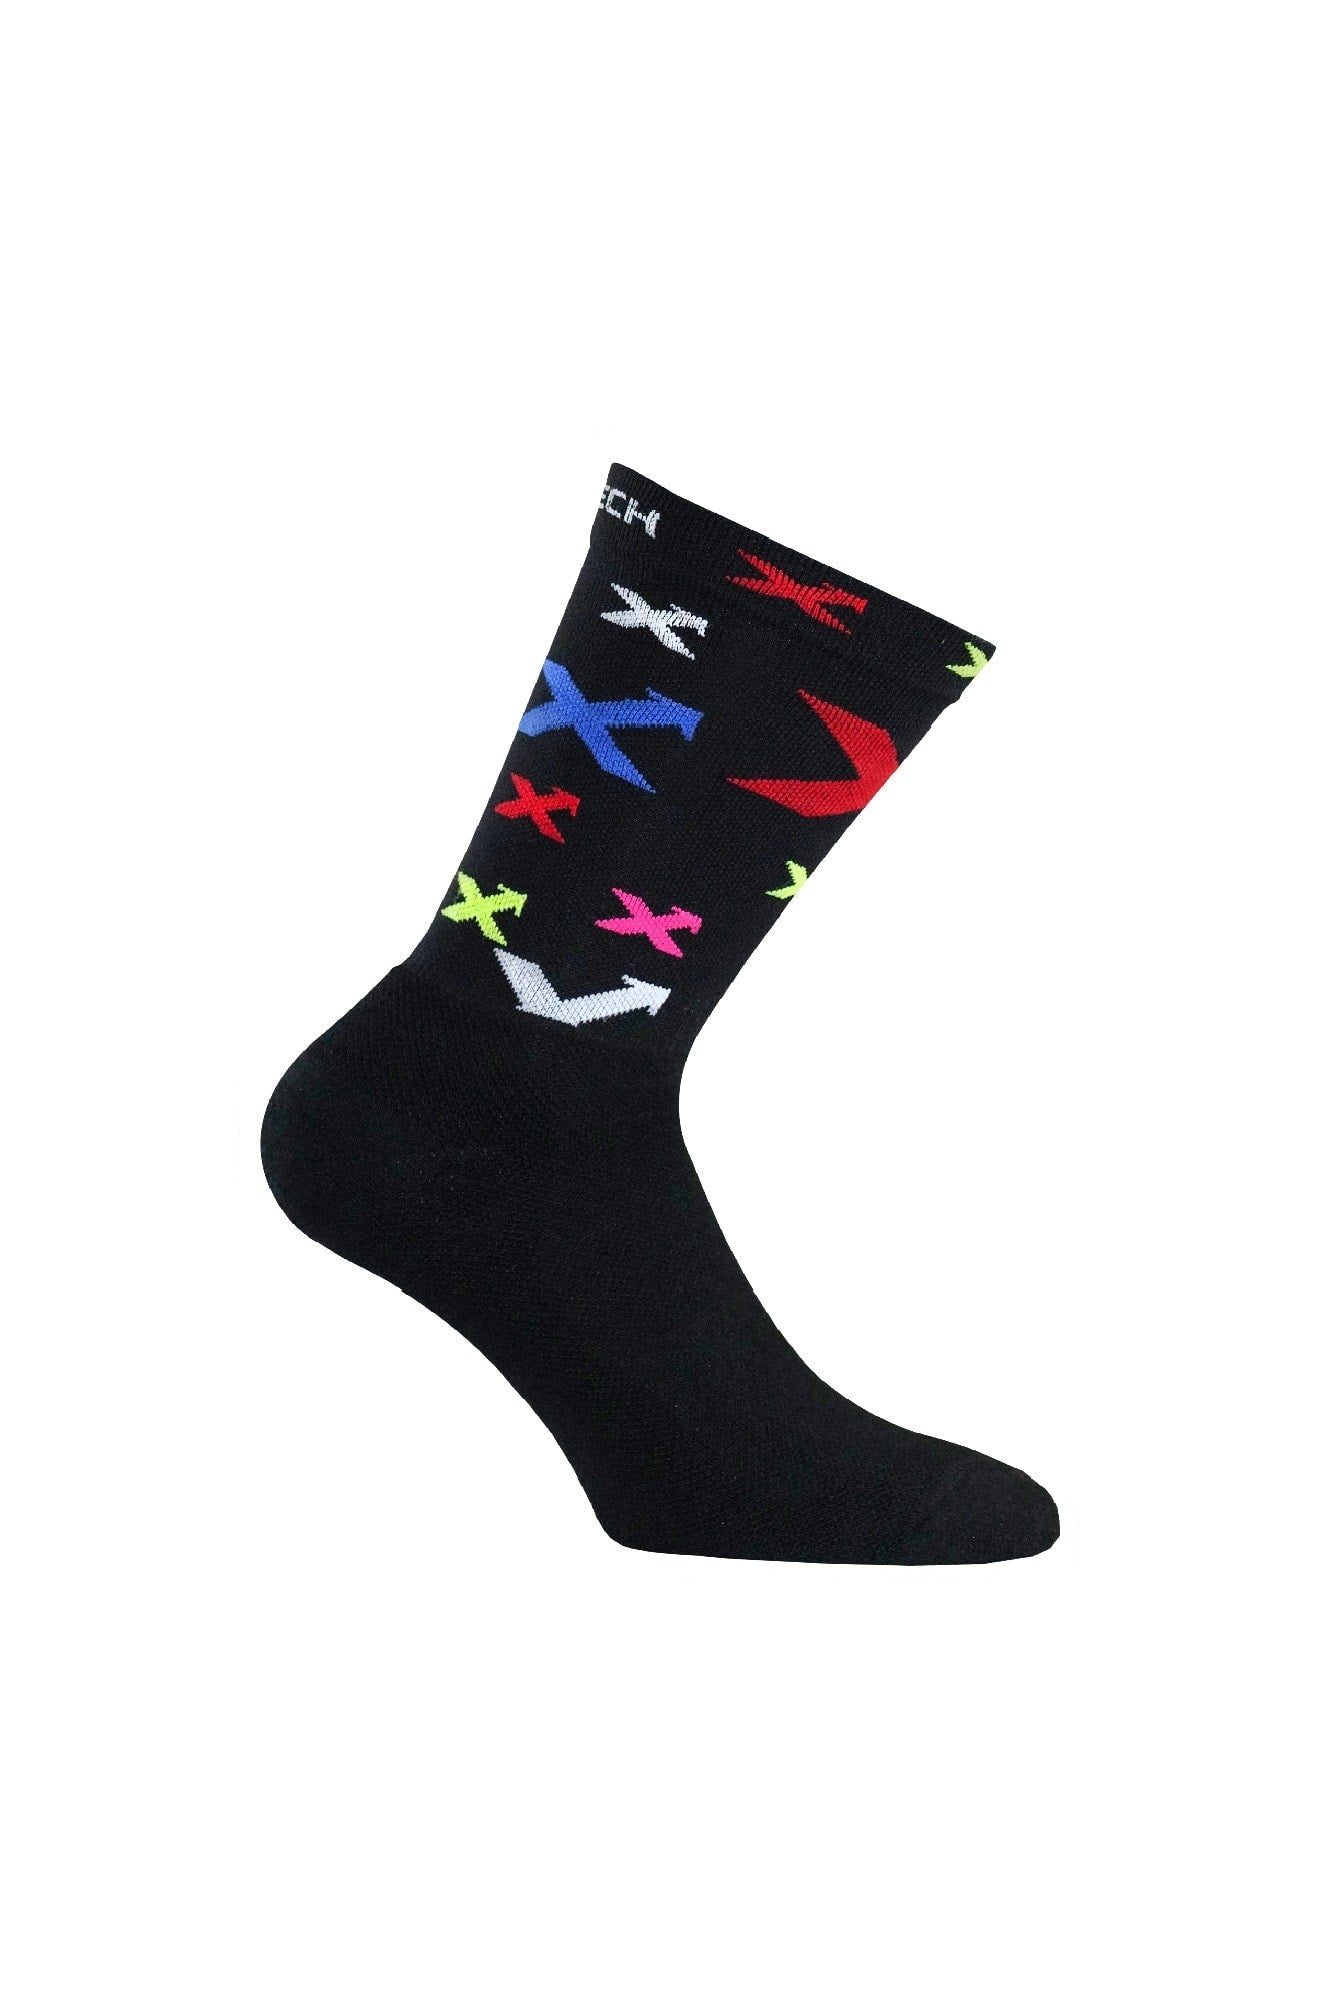 X-Tech XT124 sock